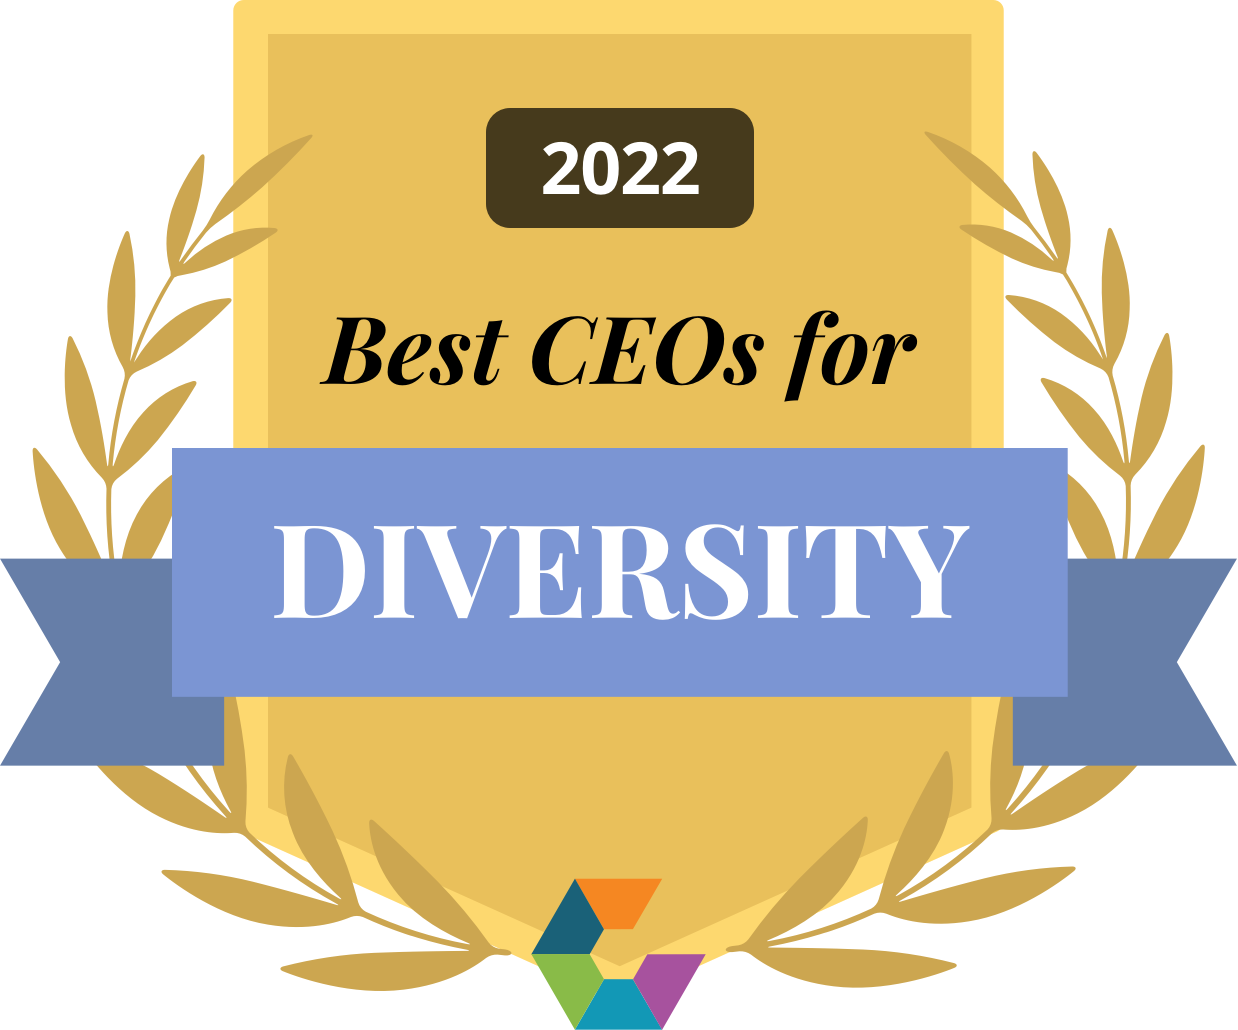 2022 Best CEOs for diversity